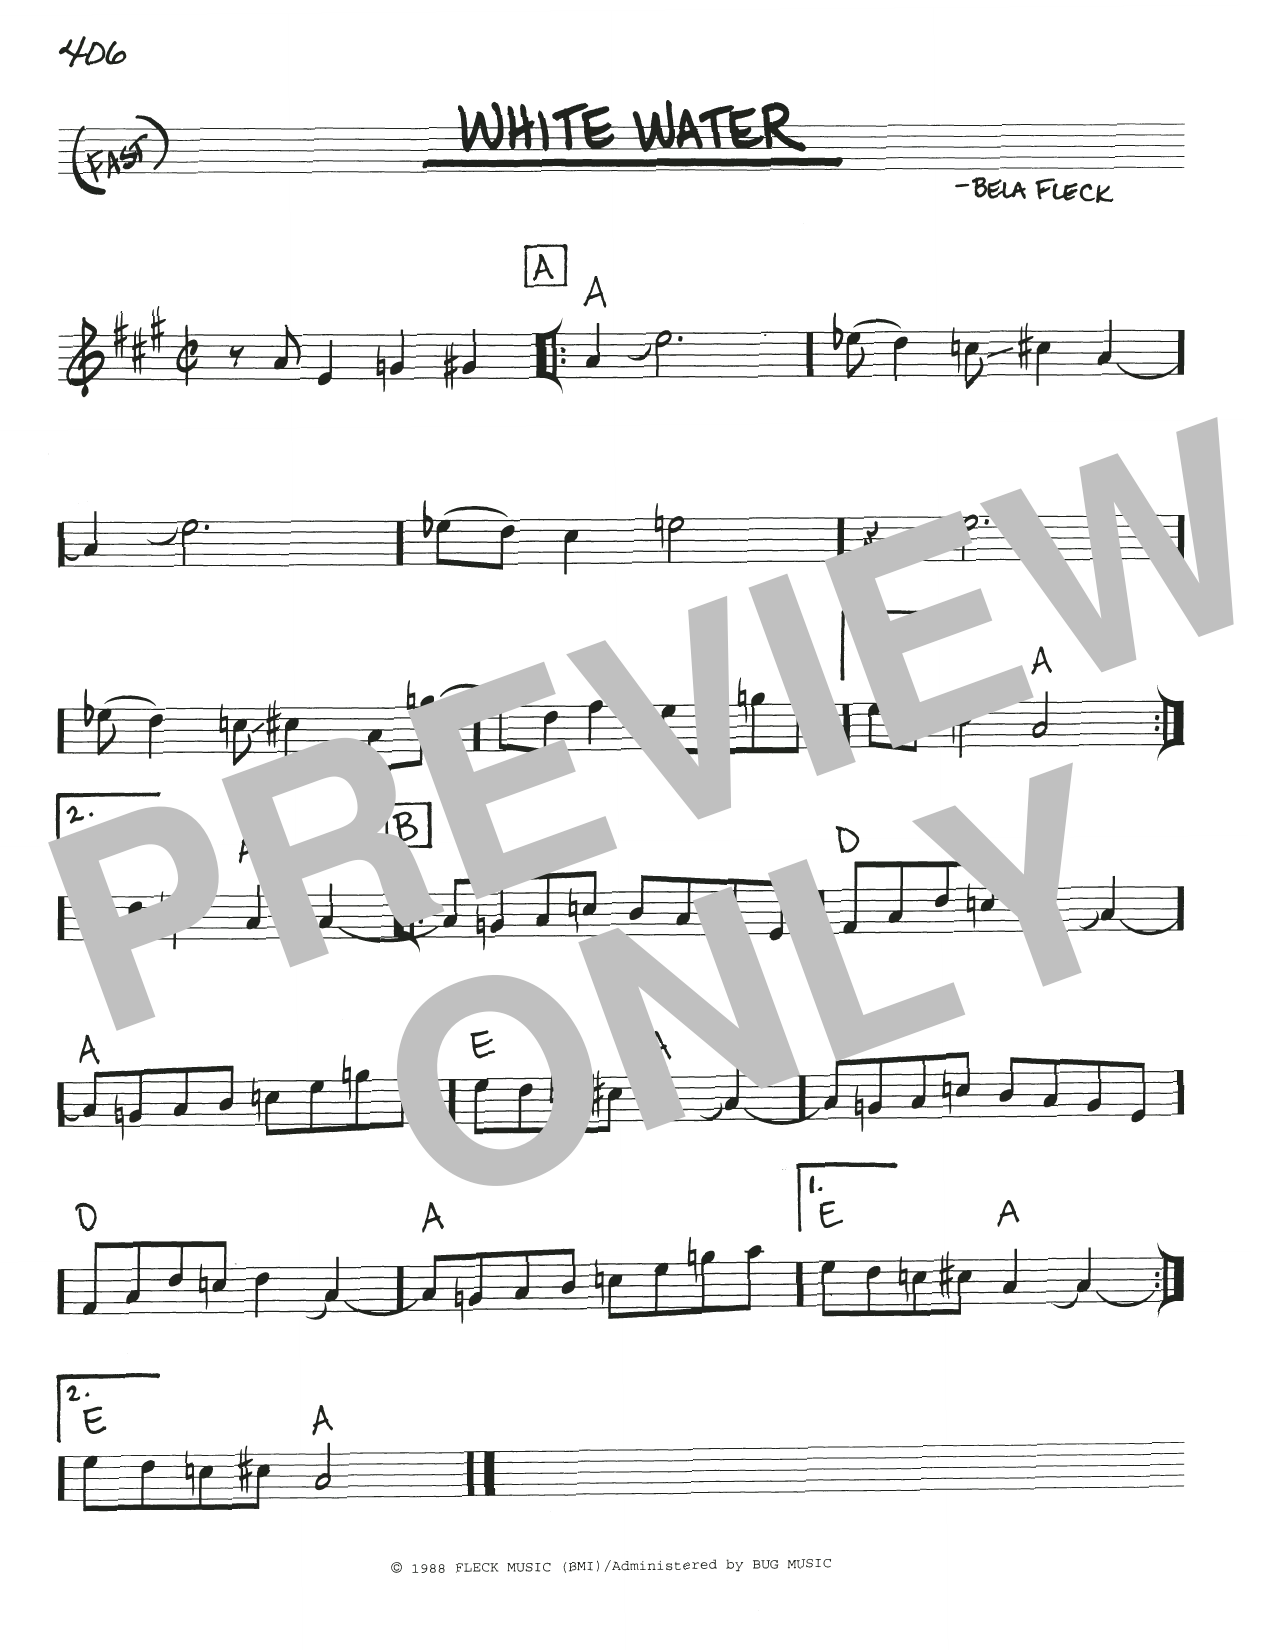 Bela Fleck White Water Sheet Music Notes & Chords for Real Book – Melody, Lyrics & Chords - Download or Print PDF